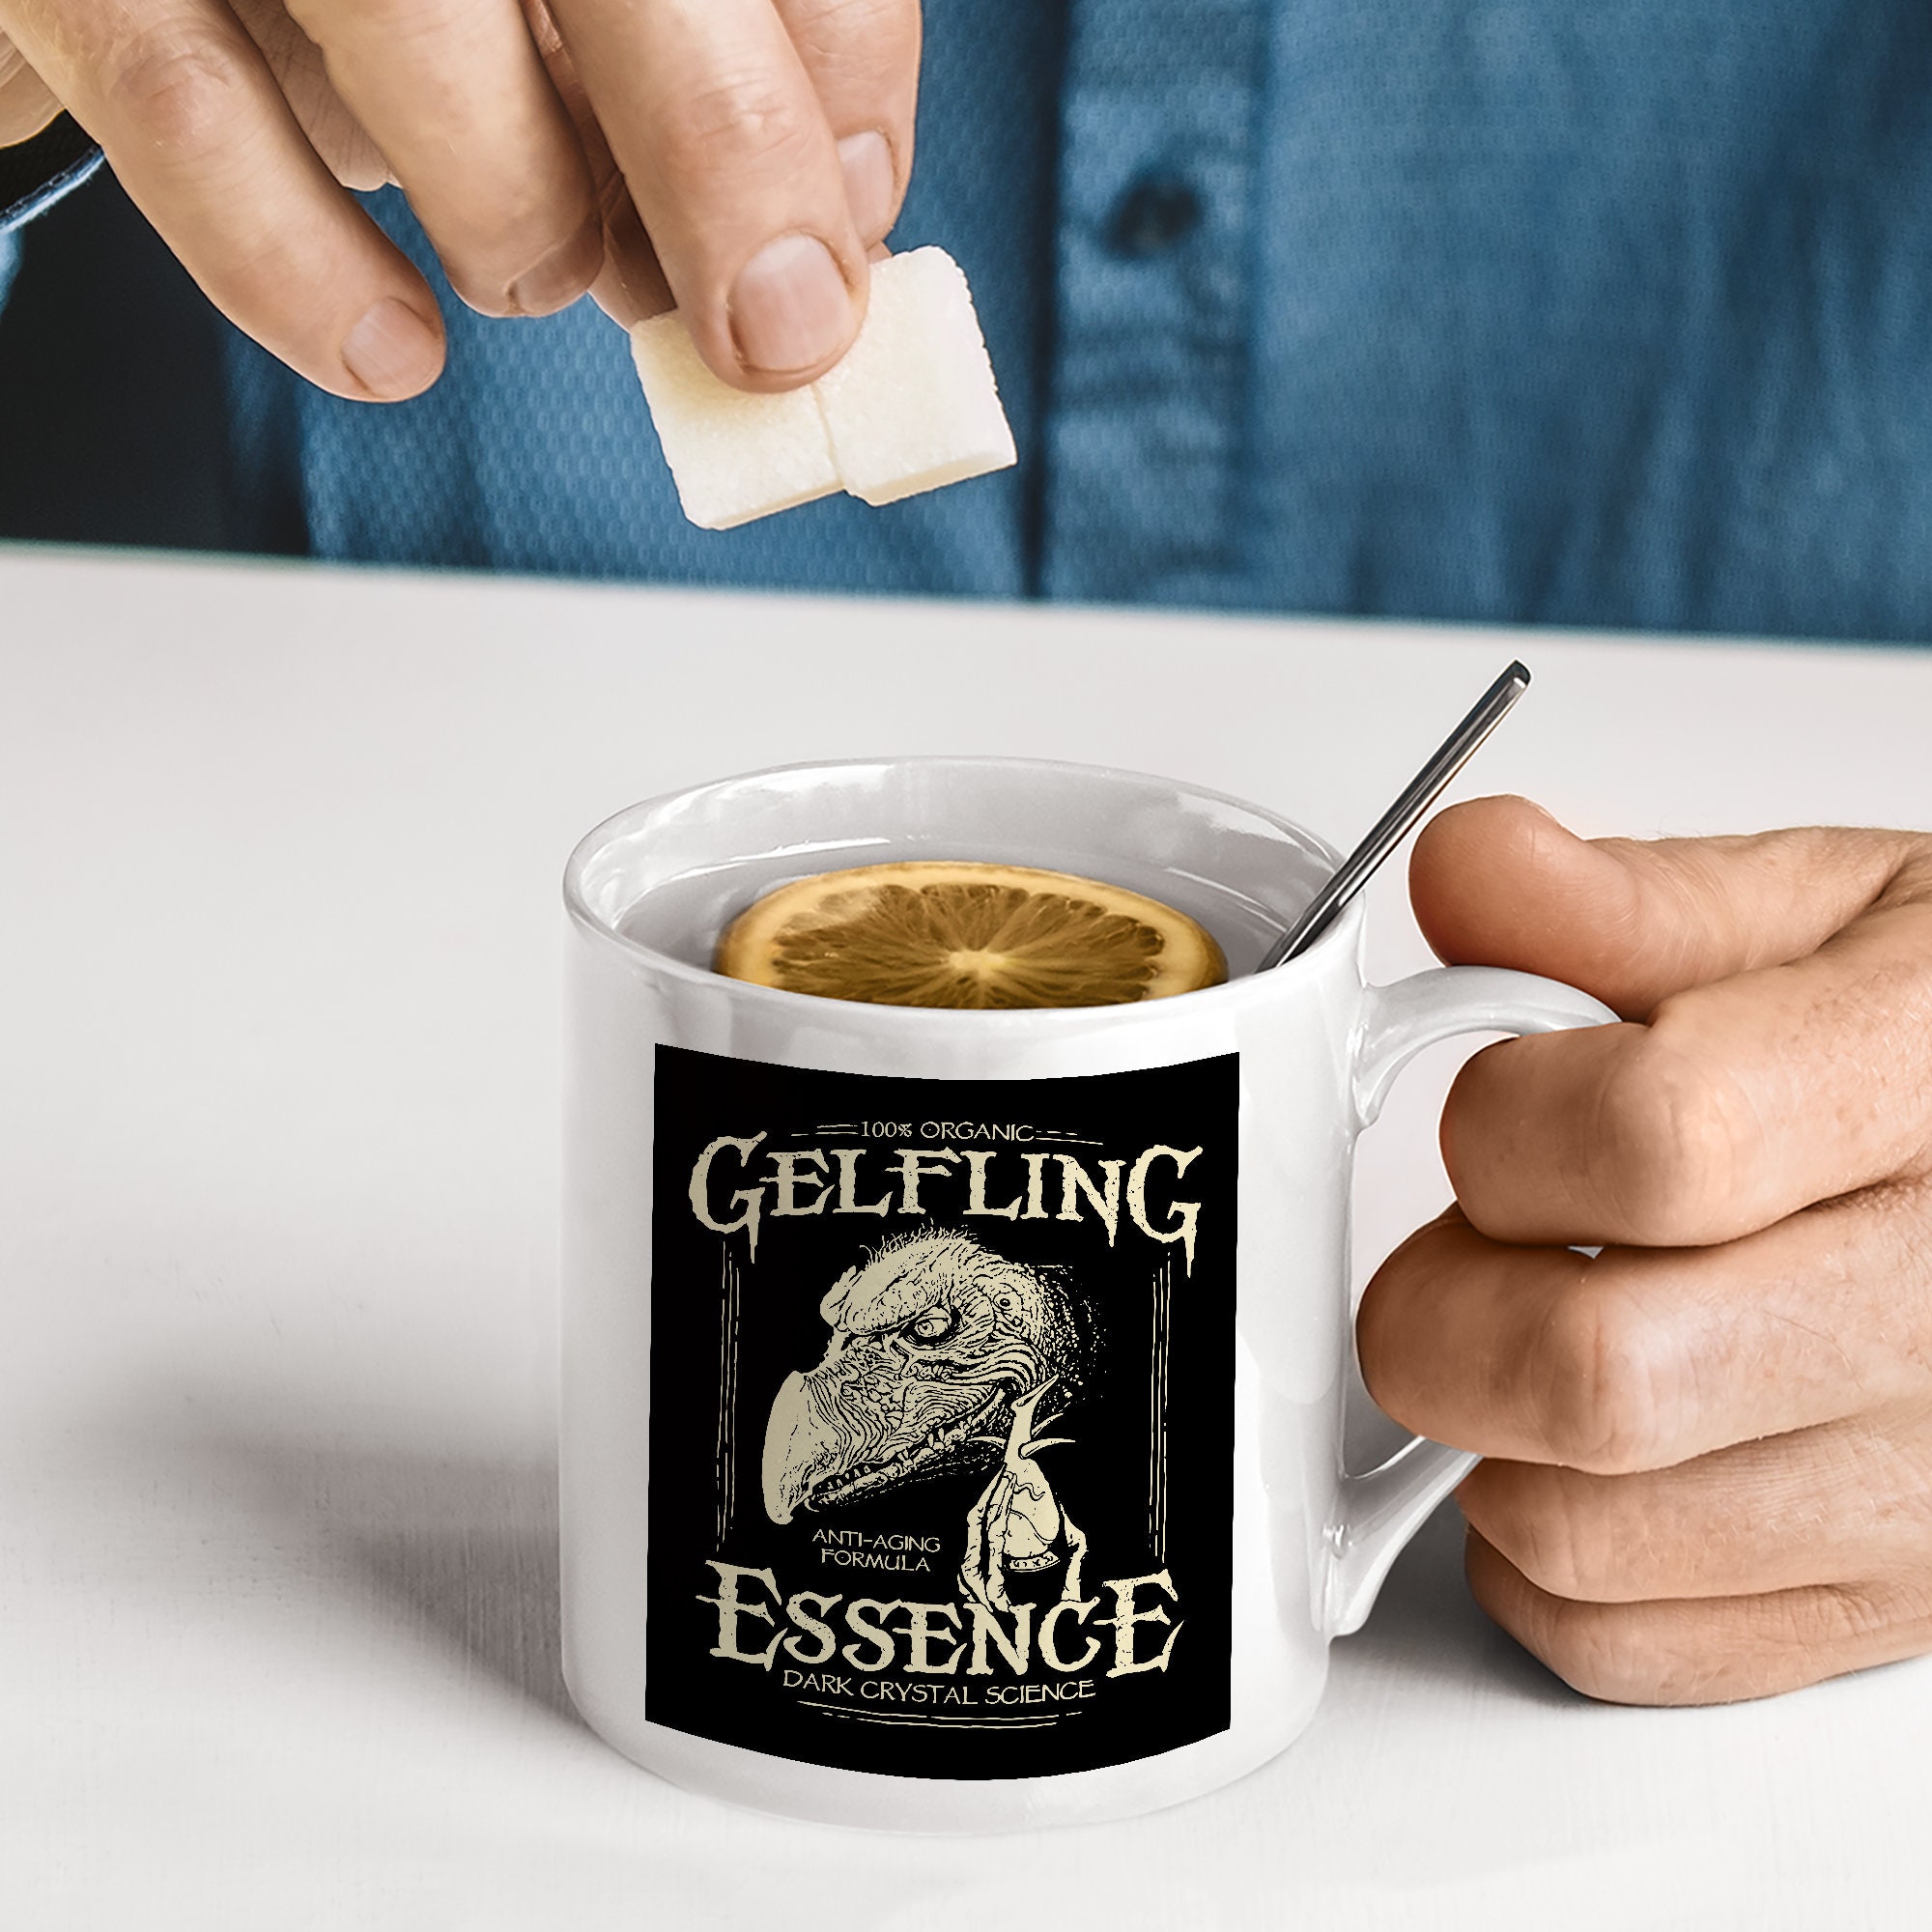 Gelfling Essence Mug The Dark Crystal Science fantasy Coffee Mug